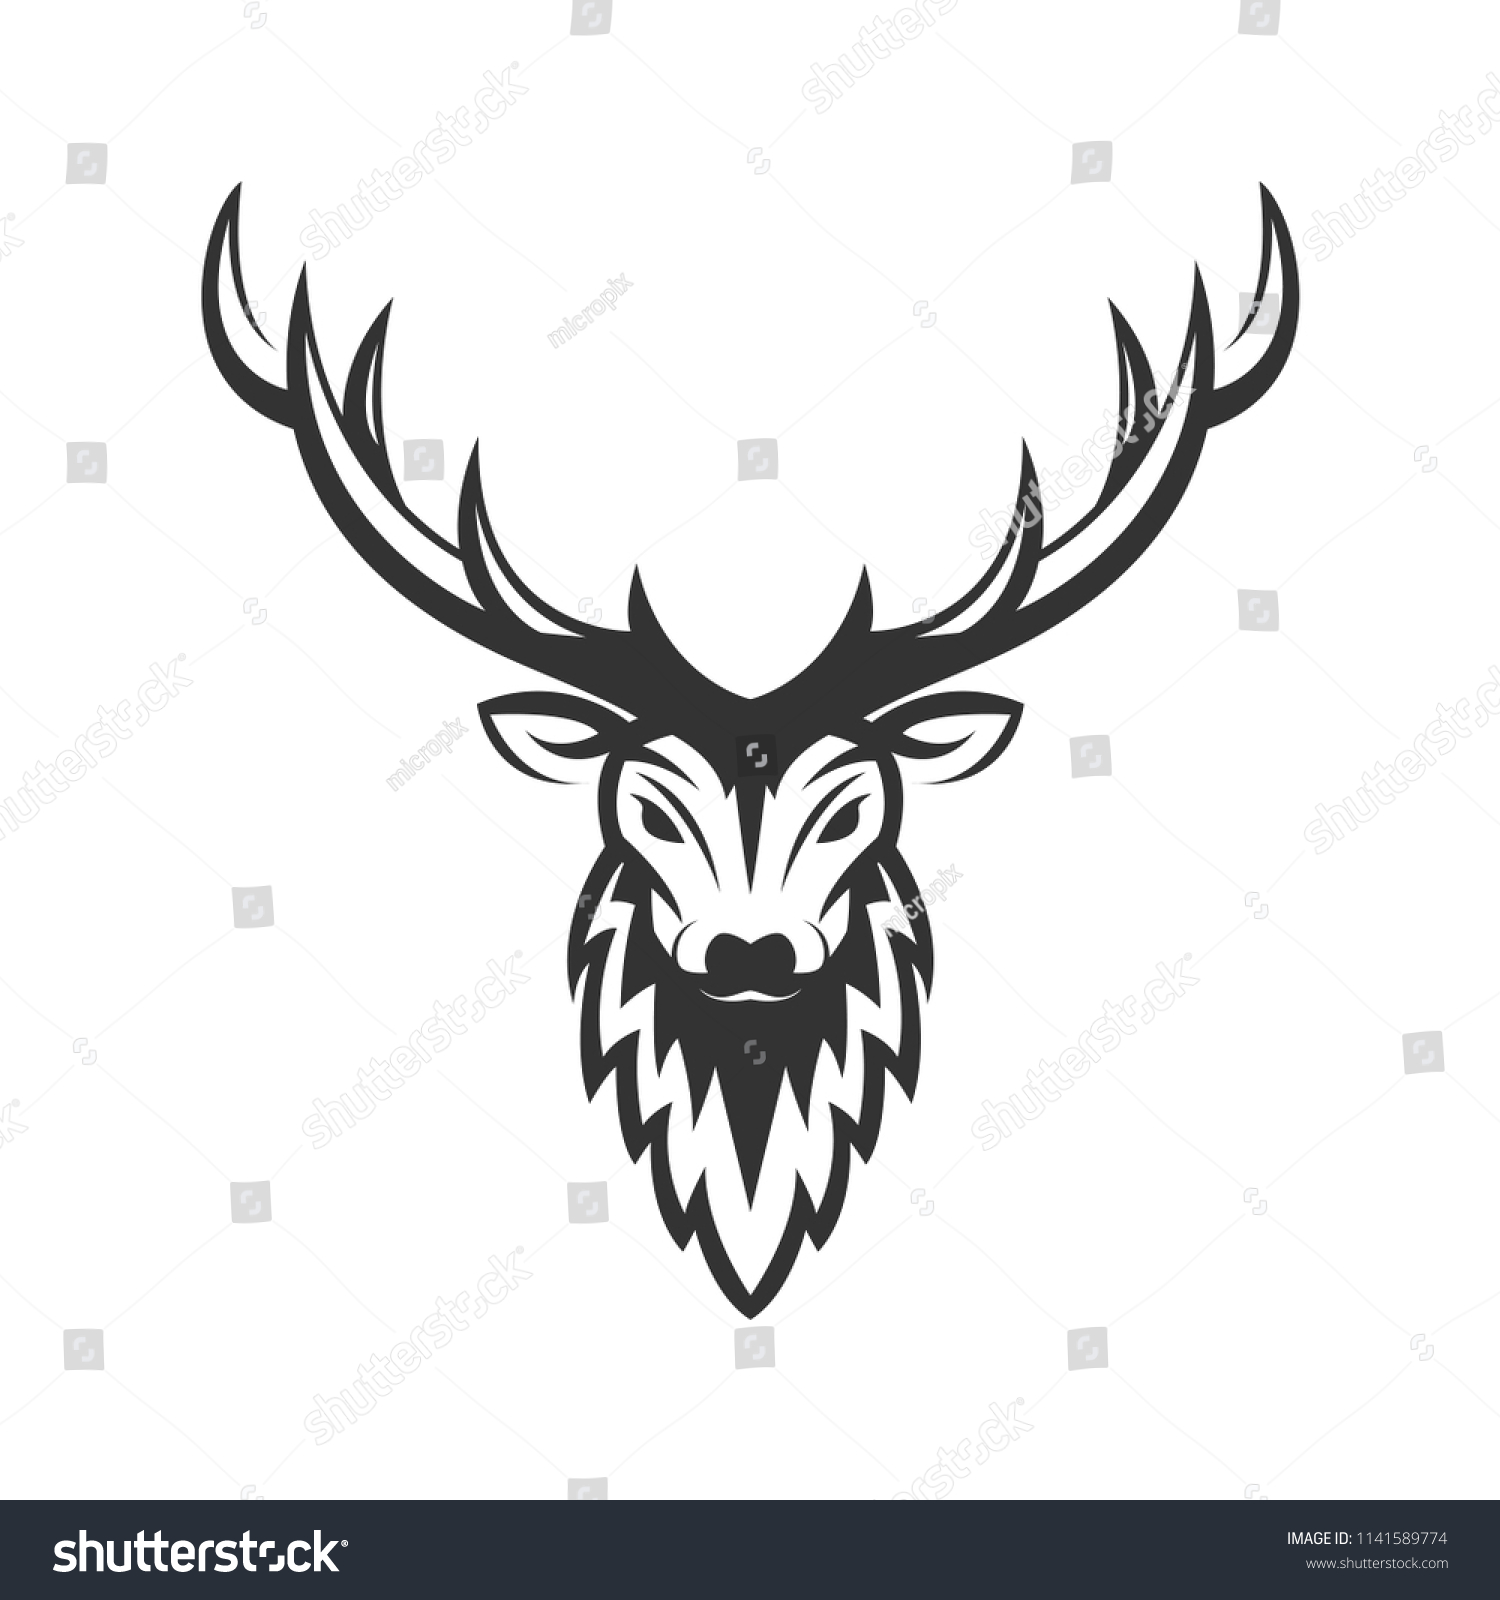 Deer Head Silhouette Vector Design Royalty Free Stock Vector 1141589774 4785